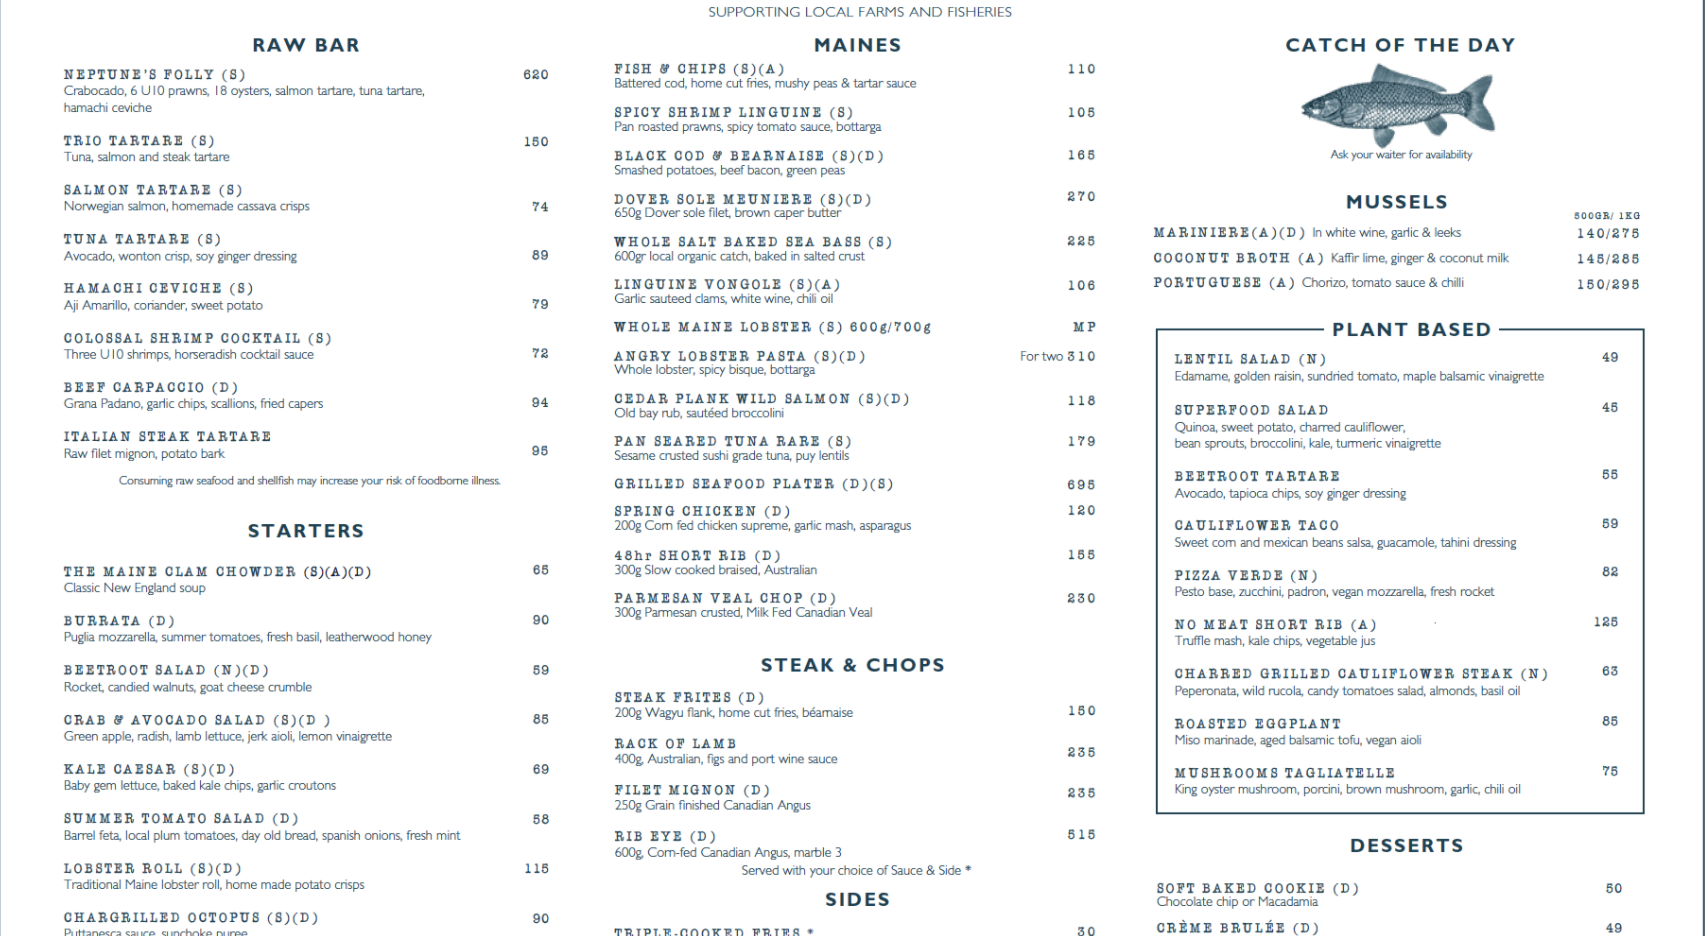 The MAINE Oyster Bar & Grill, JBR menu